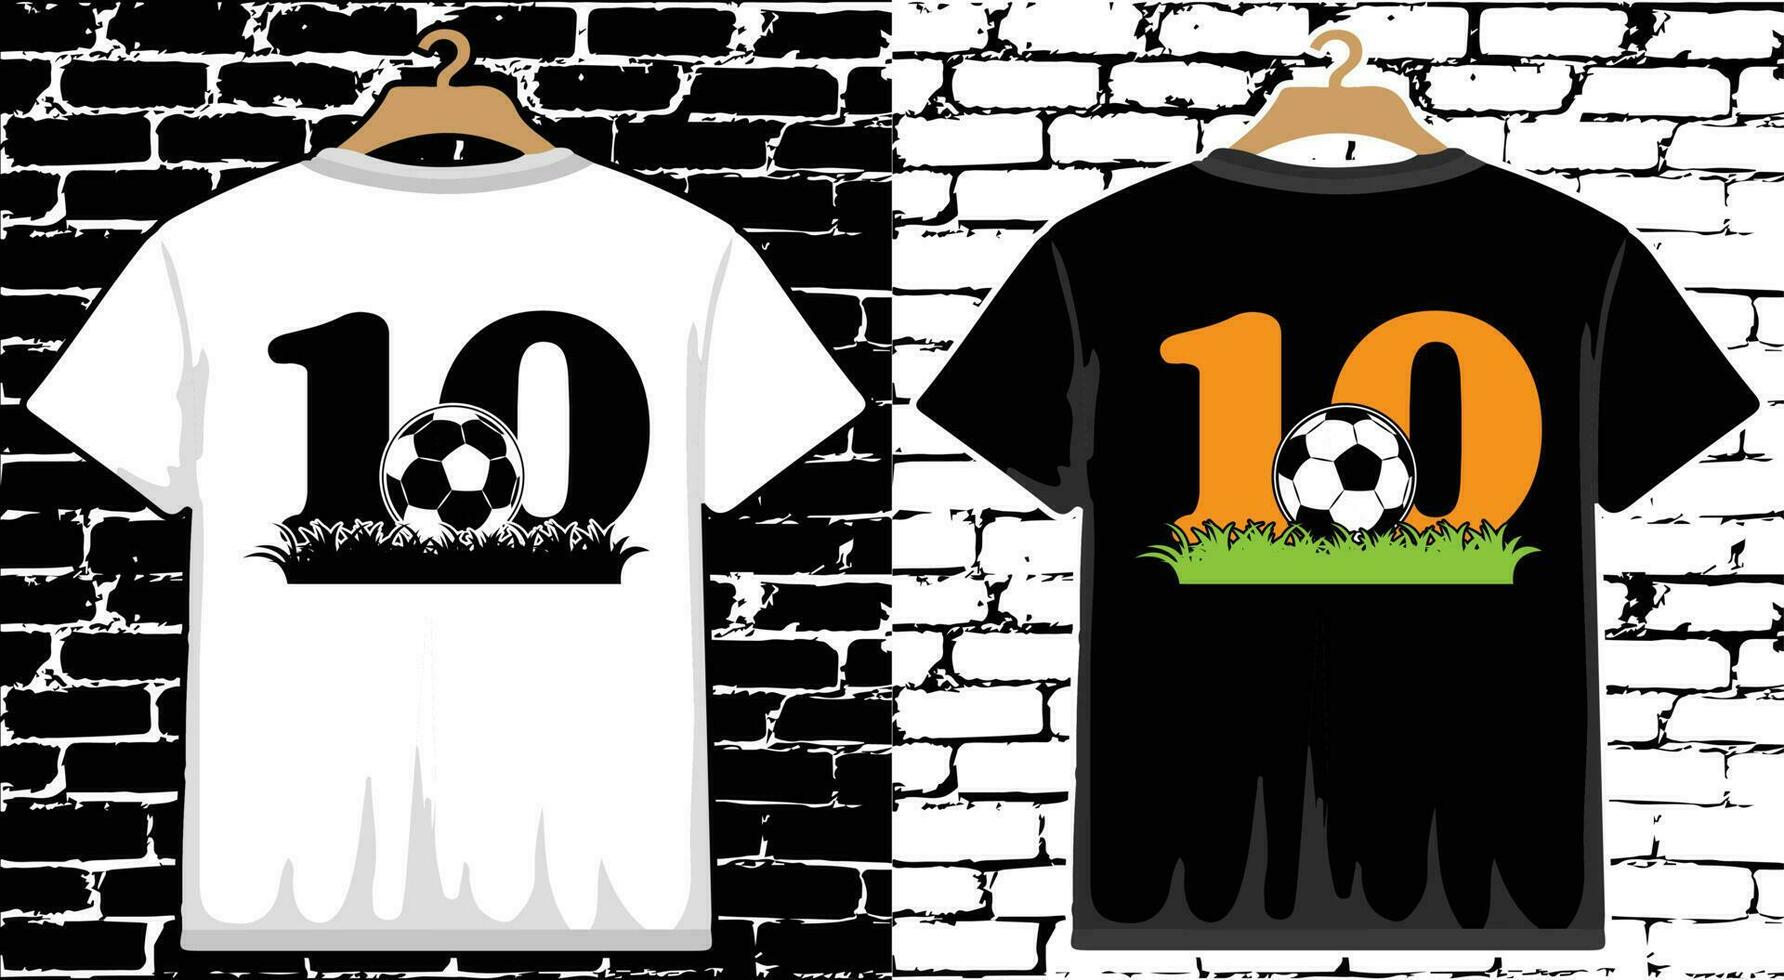 fútbol t camisa diseño, vector fútbol t camisa diseño, fútbol americano camisa, fútbol tipografía t camisa diseño